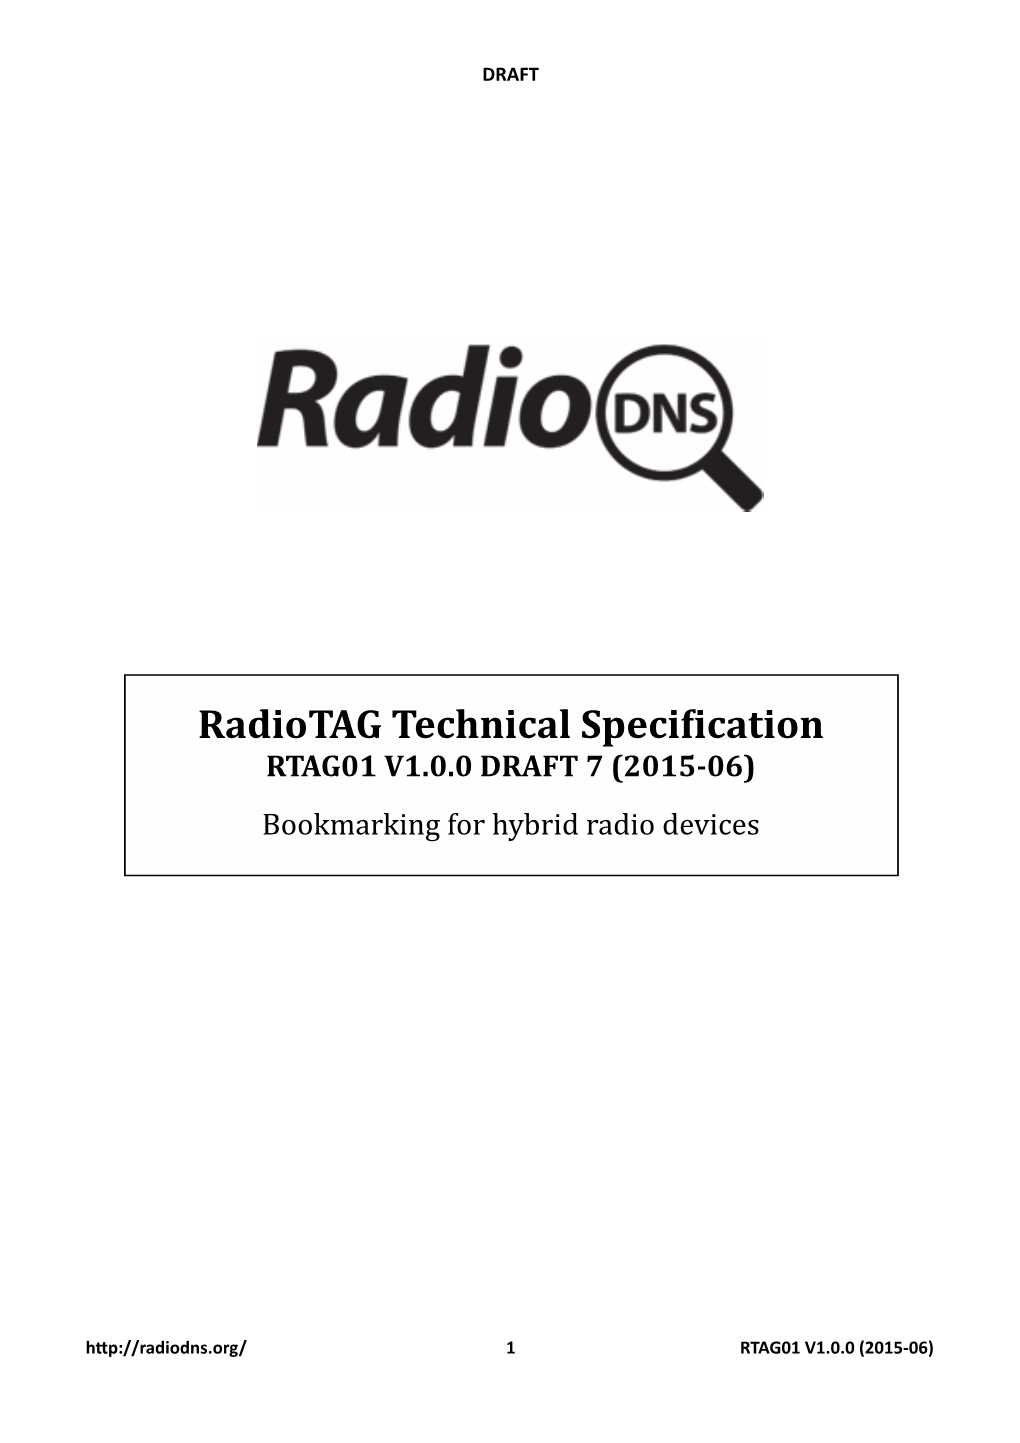 RTAG01 V1.0.0 DRAFT 7 (2015-06)! Bookmarking for Hybrid Radio Devices